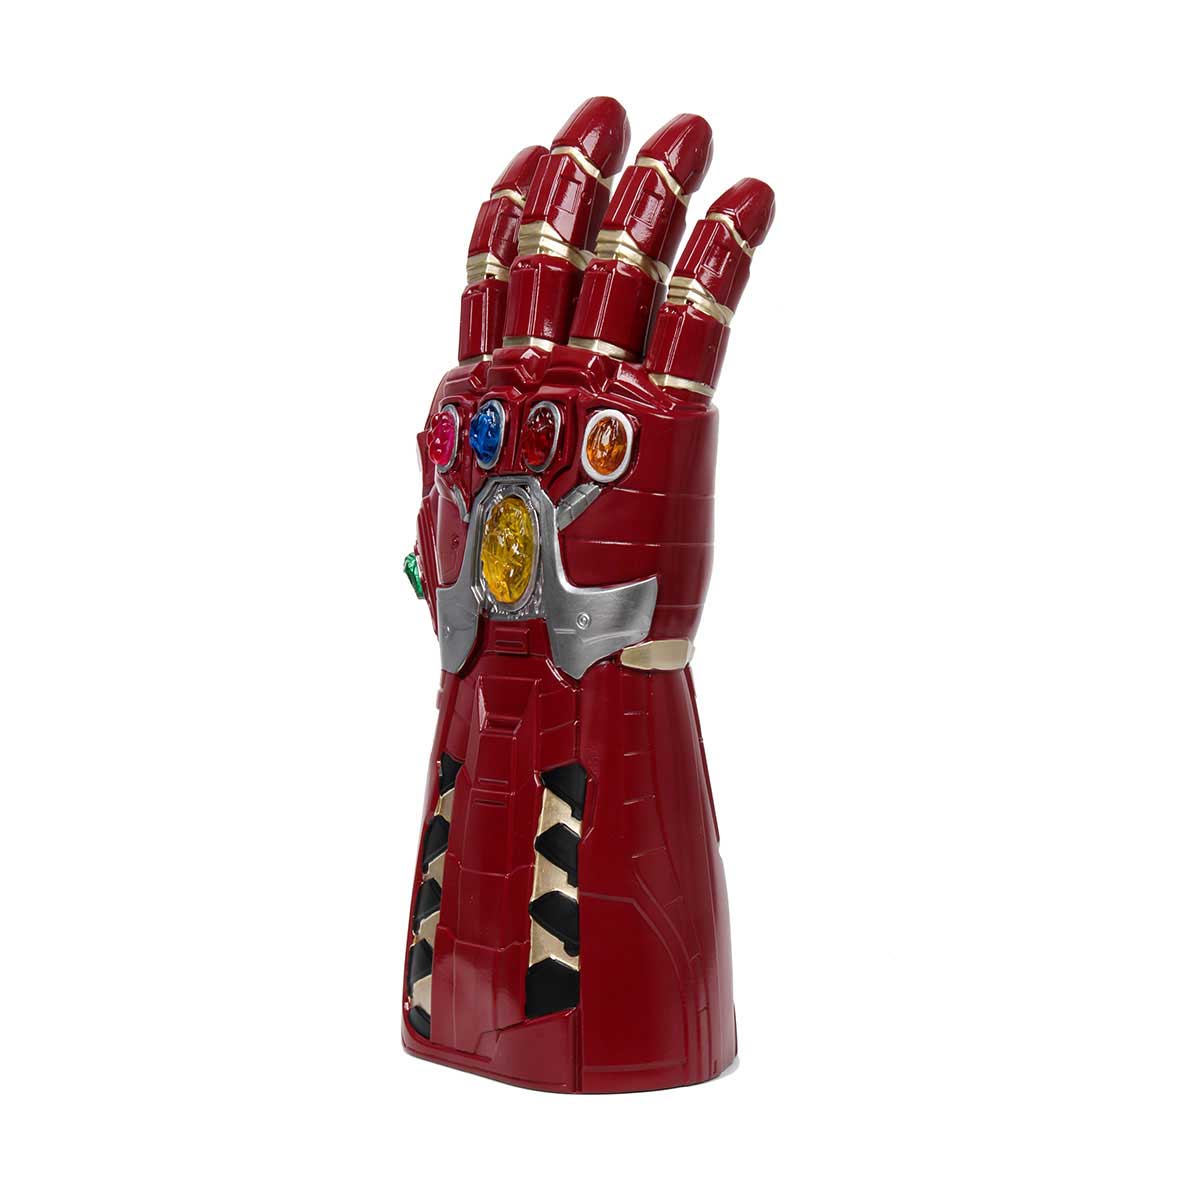 Avenges 4 EndGame Iron Man Tony Stark had Gloves